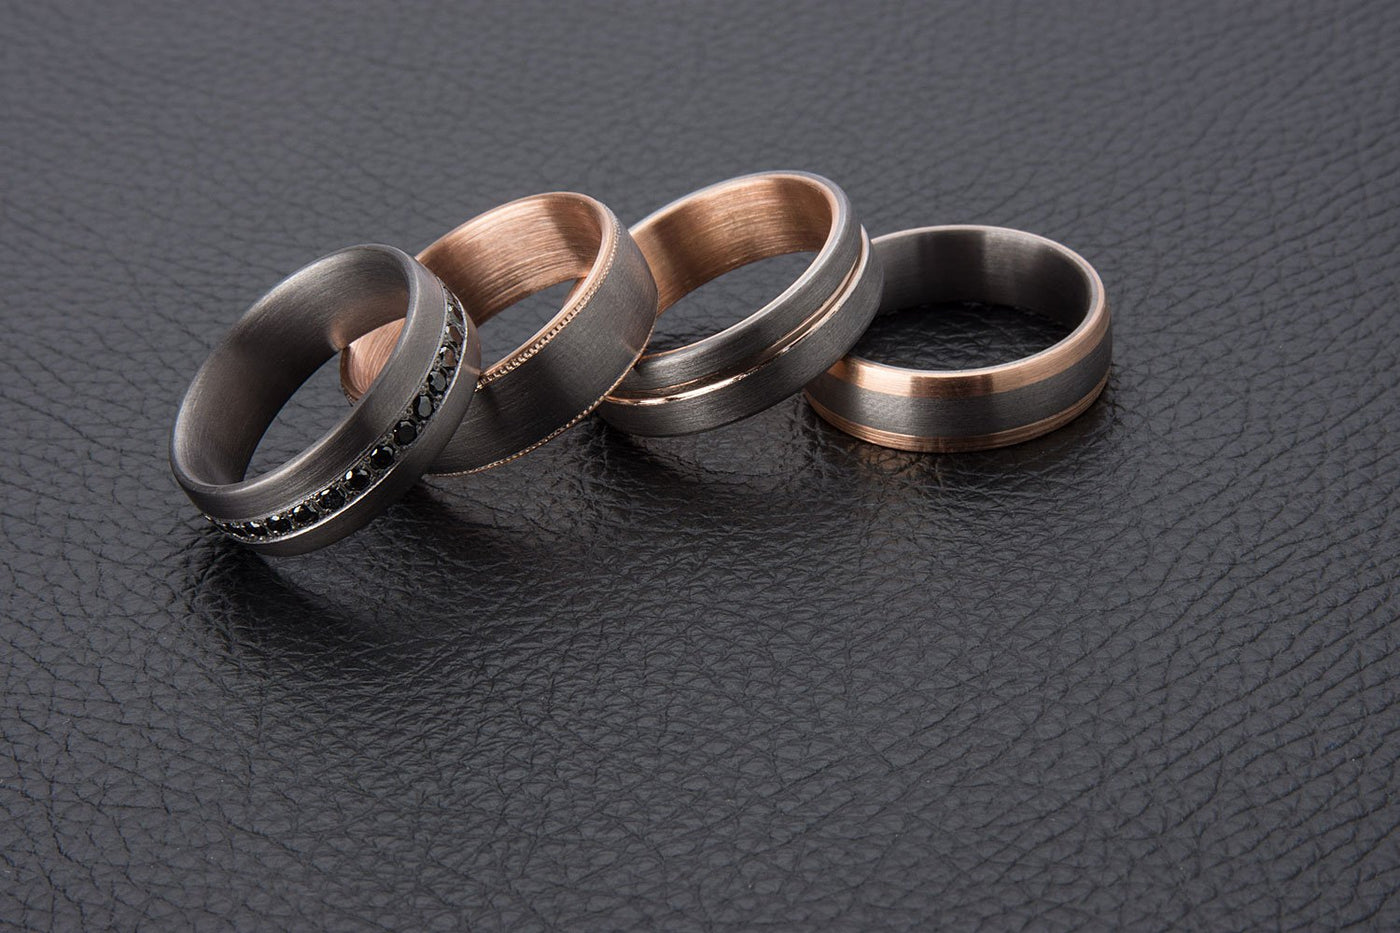 Wedding Rings Melbourne